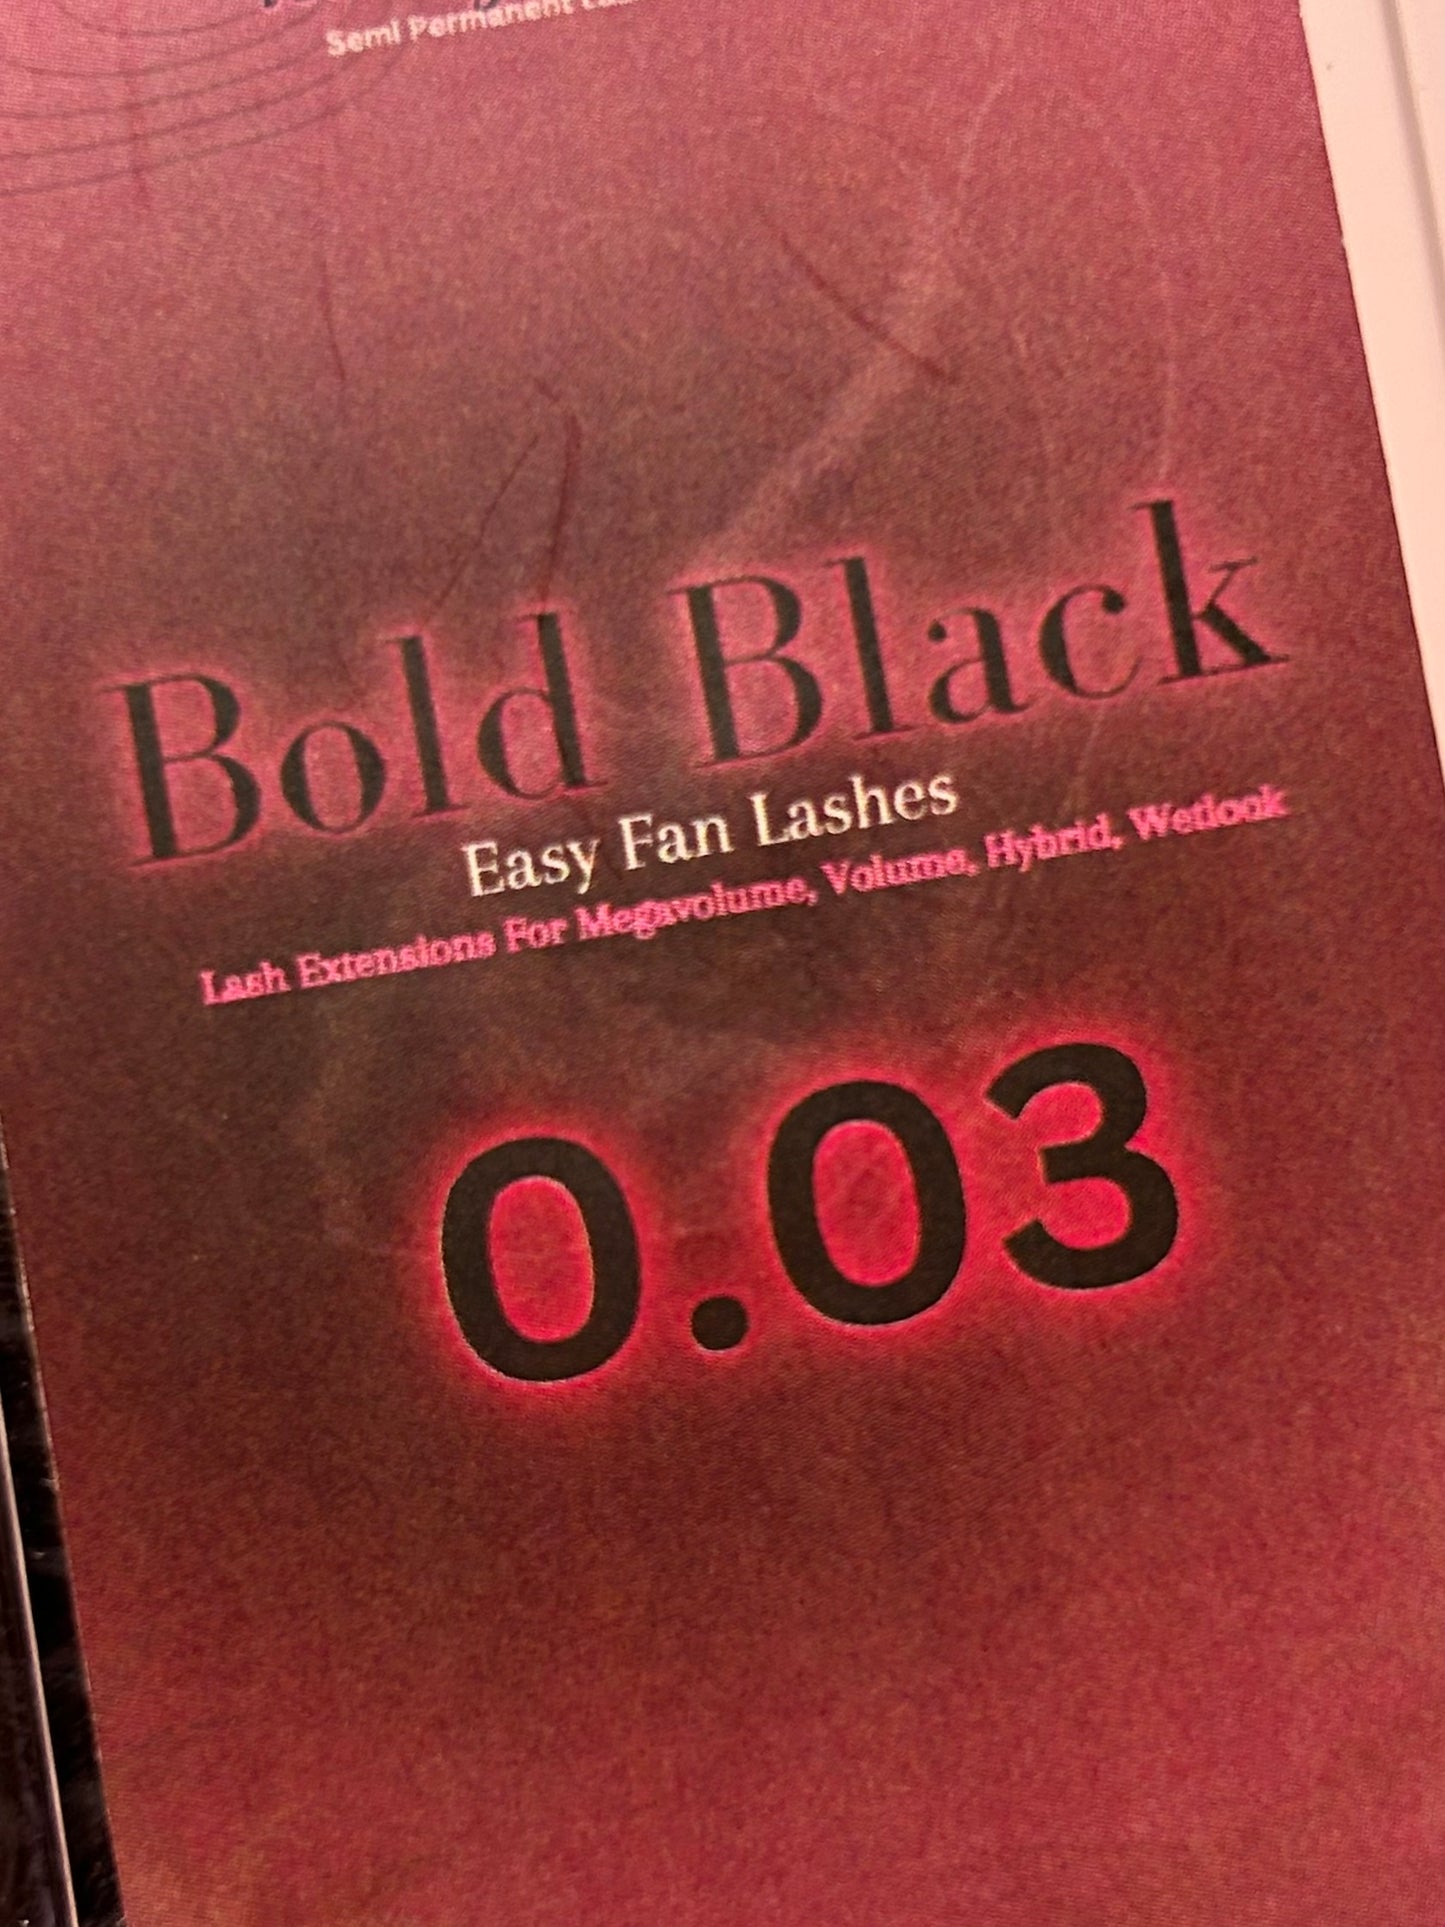 0.03 Bold Black Easy Fan Lashes for Mega Volume and Volume